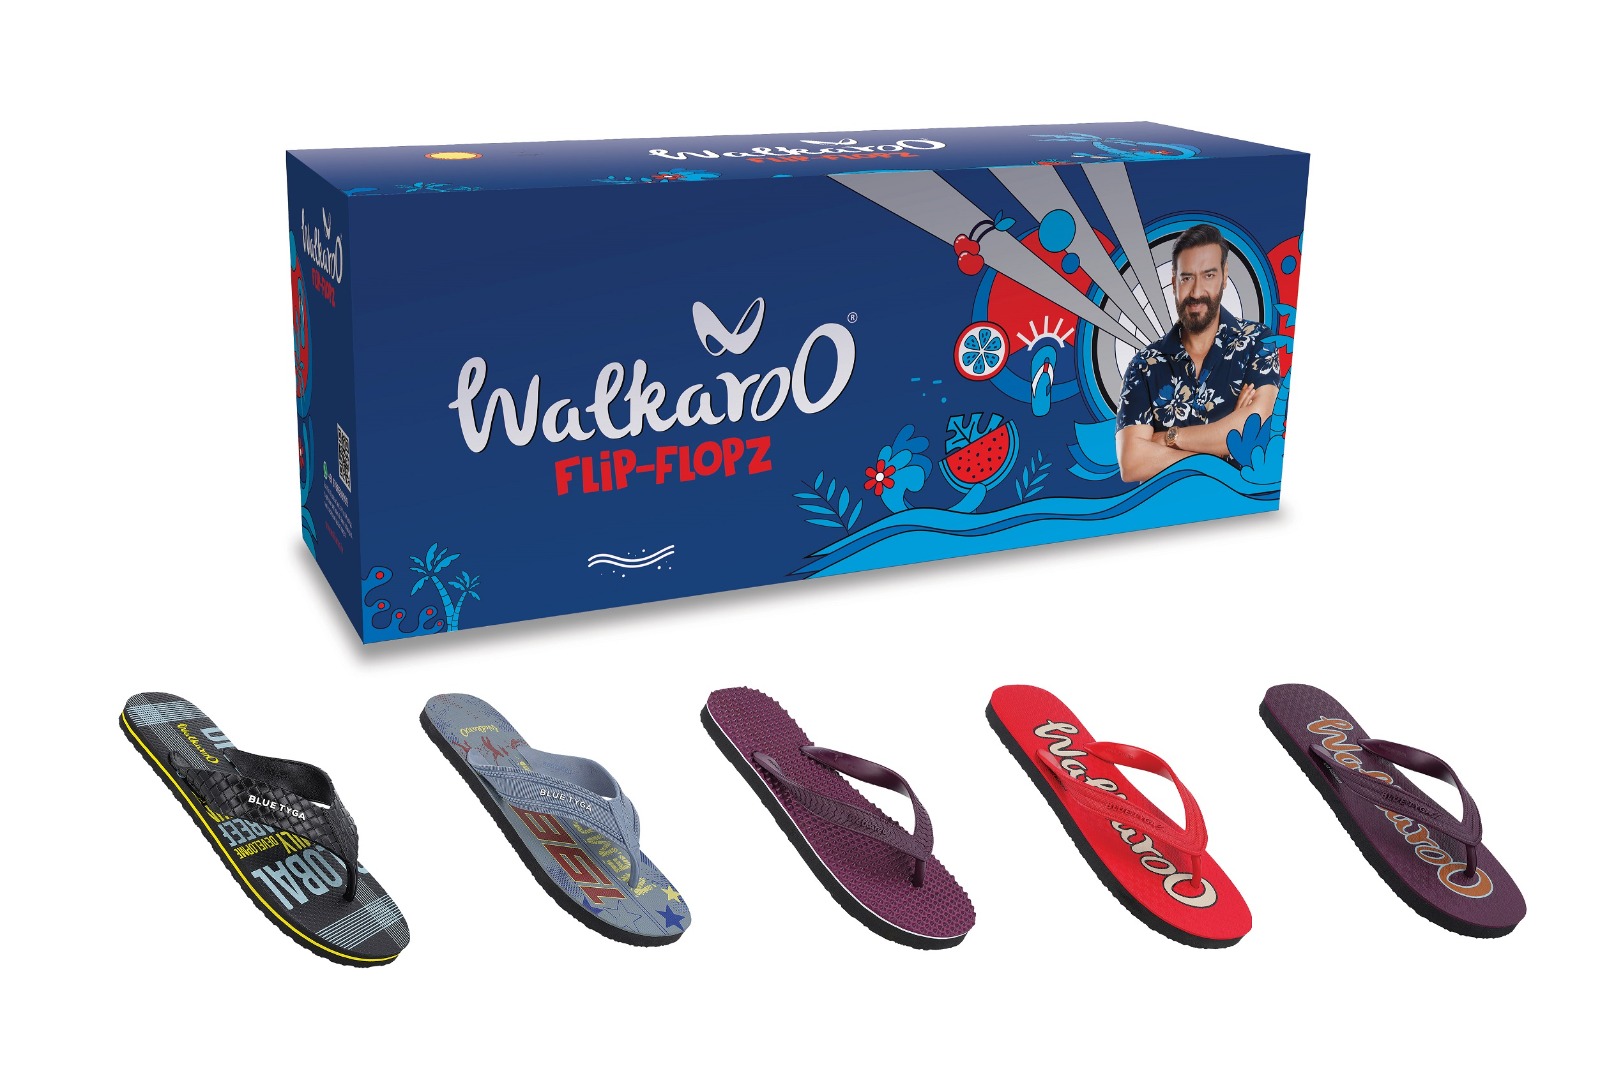 Walkaroo launches new brand “Flip-Flopz “Cool and Stylish Range of Hawai”